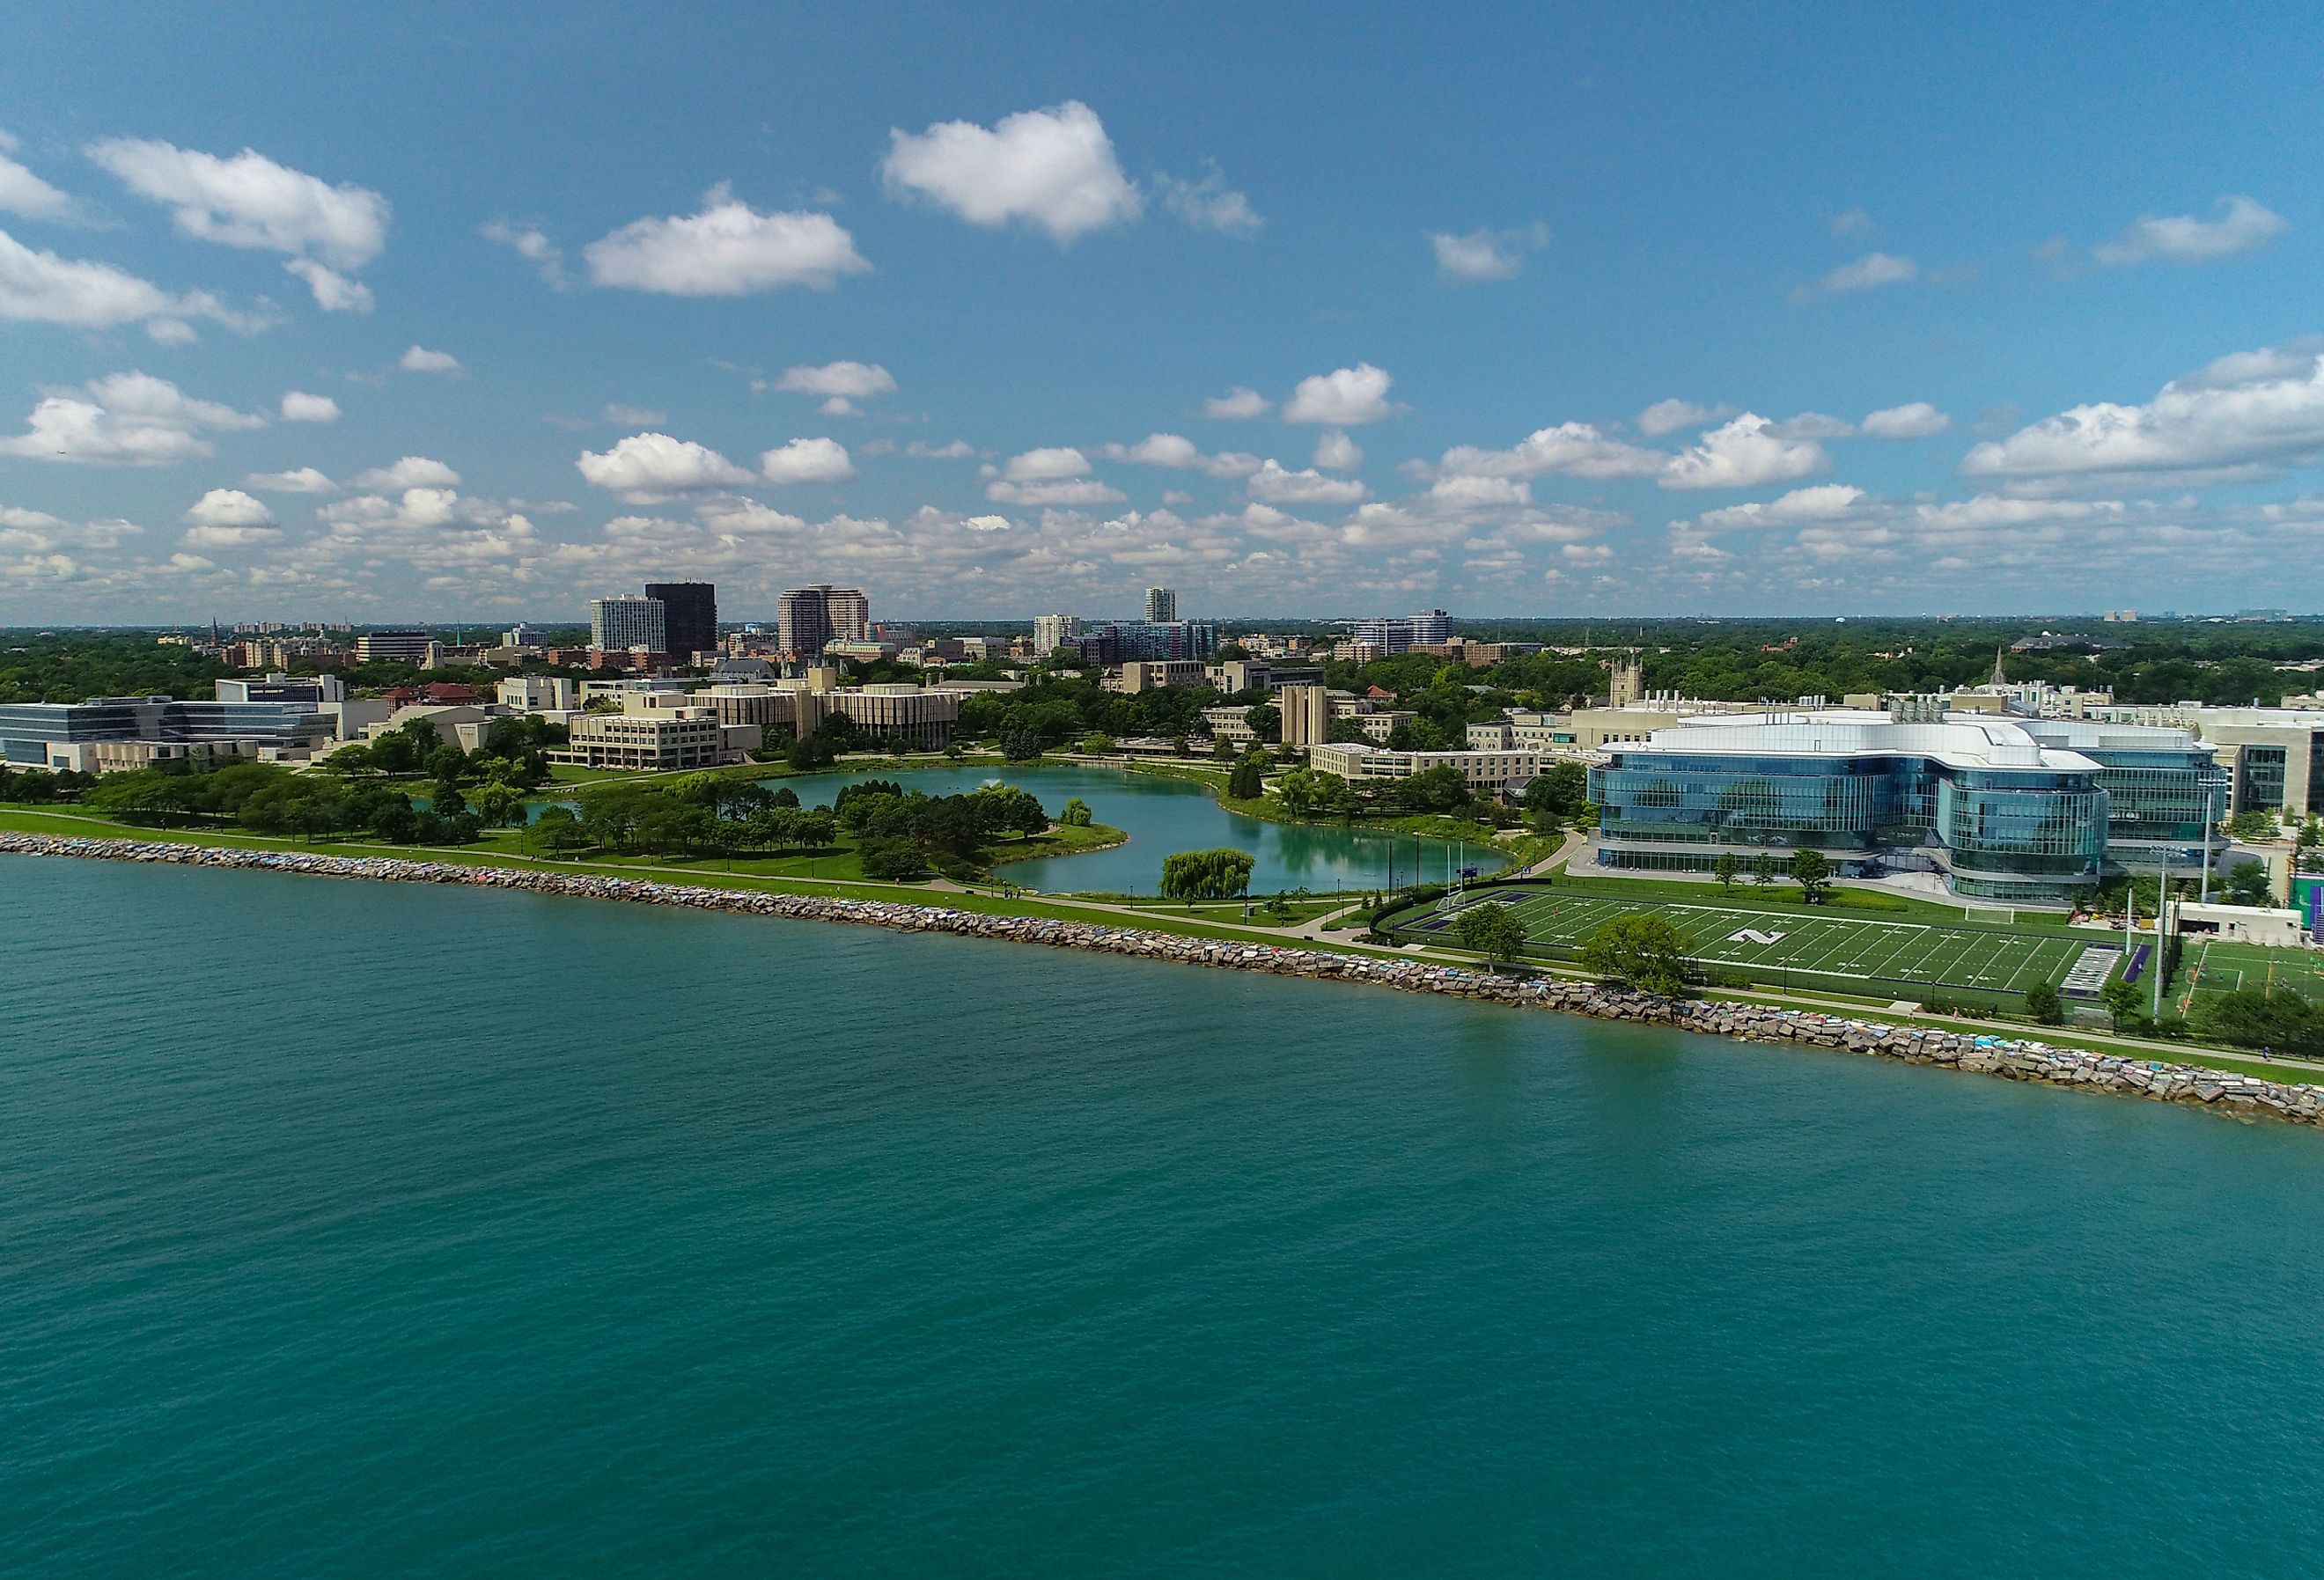 Aerial Waterfront View of Northwestern University Campus in Evanston, Illinois. Image credit Aerialworks USA via Shutterstock